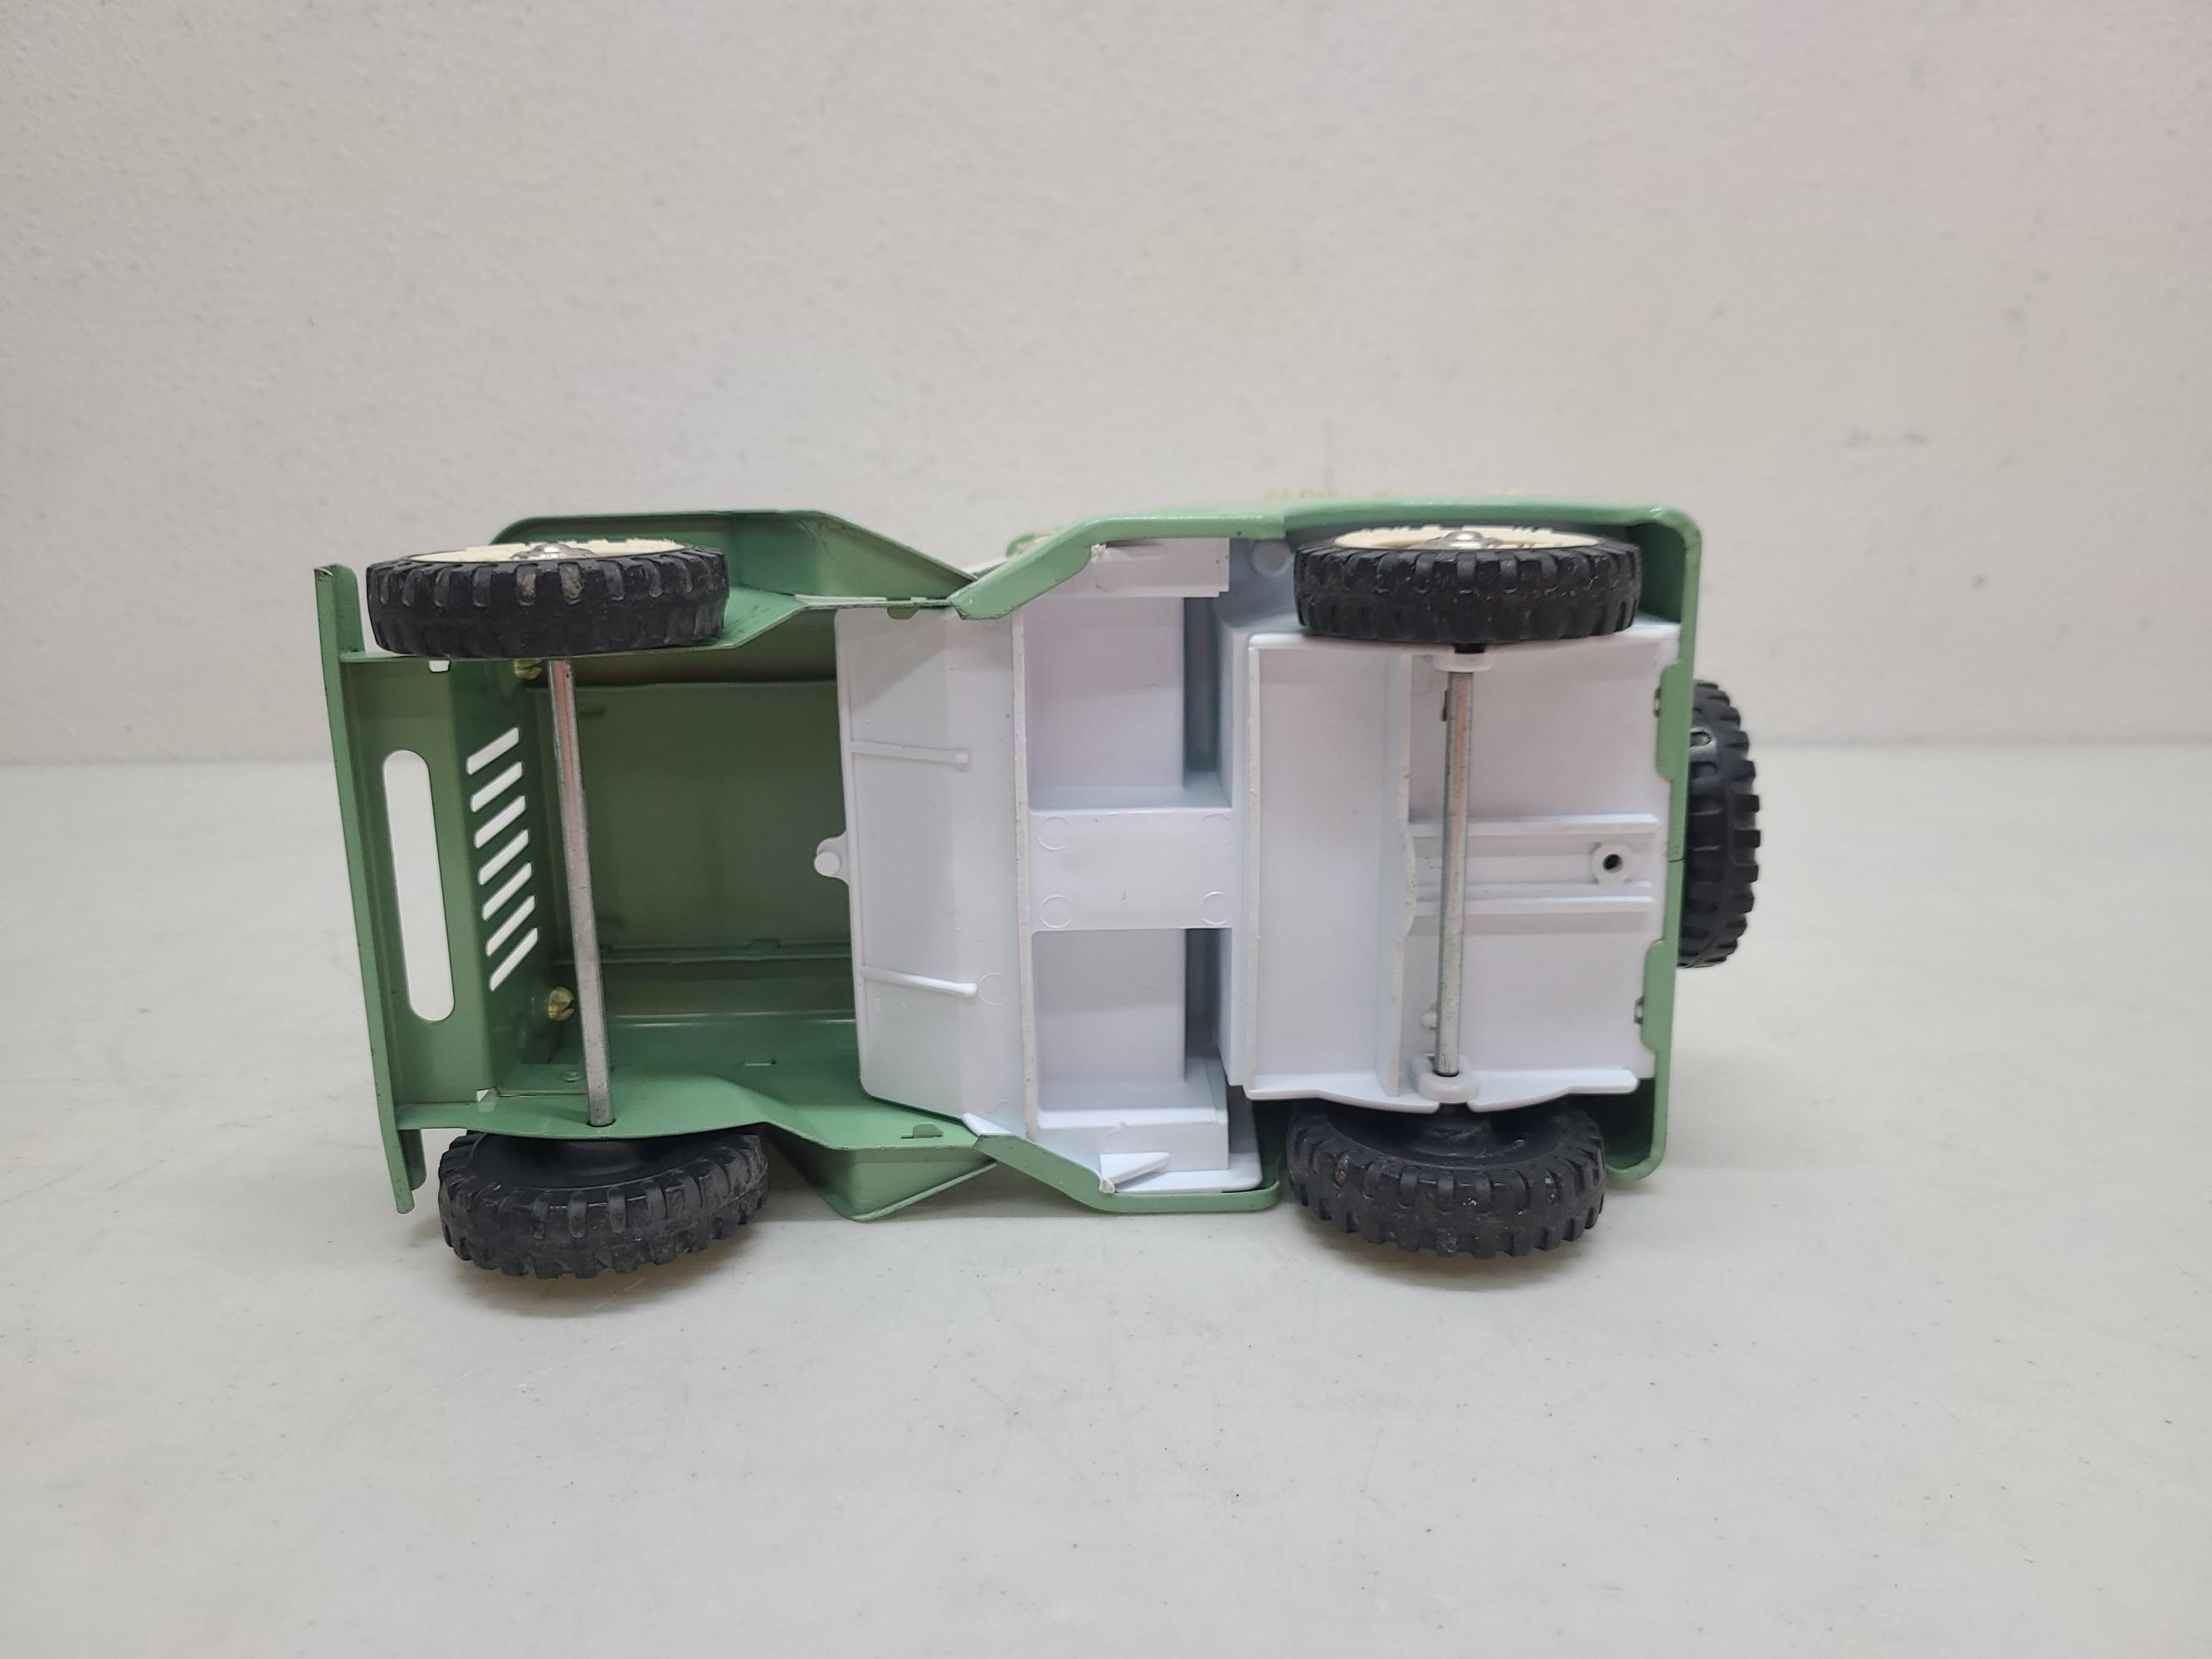 Tonka Outdoor Living Jeep Surrey Toy